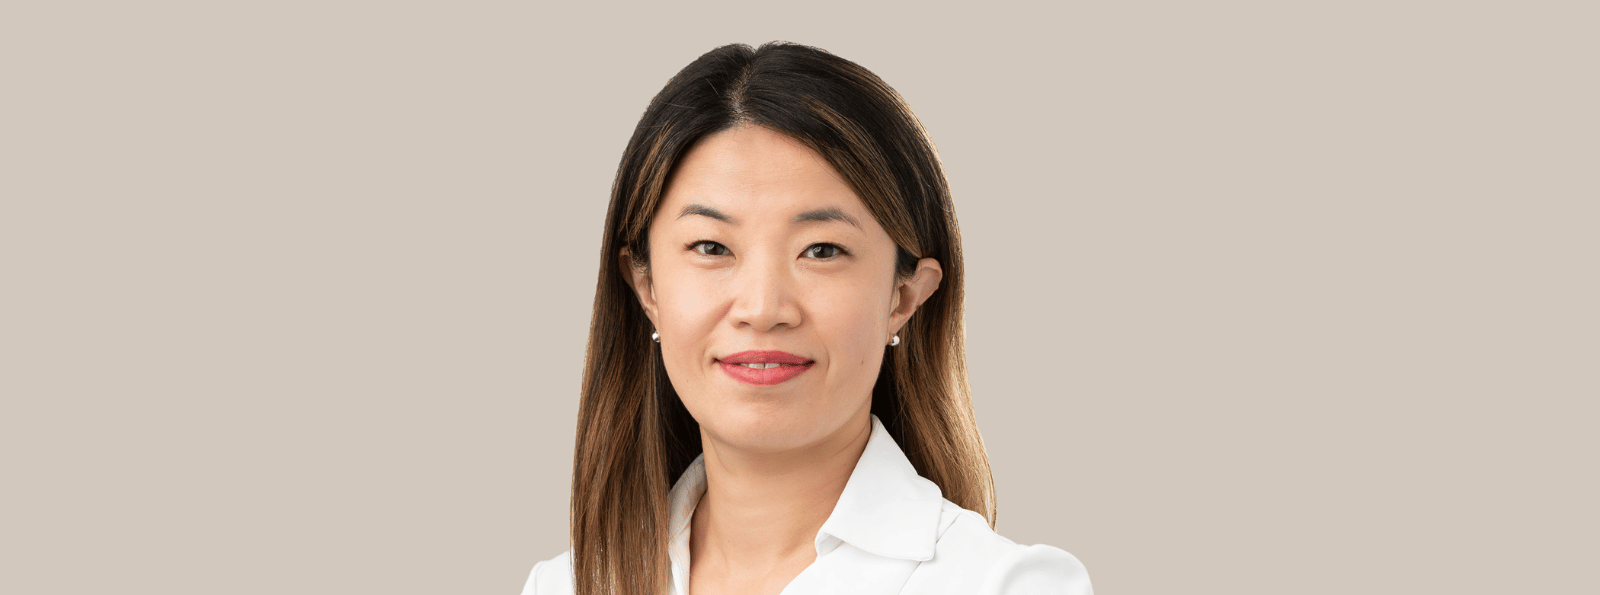 Qiao Ma, portfolio manager, Munro Partners